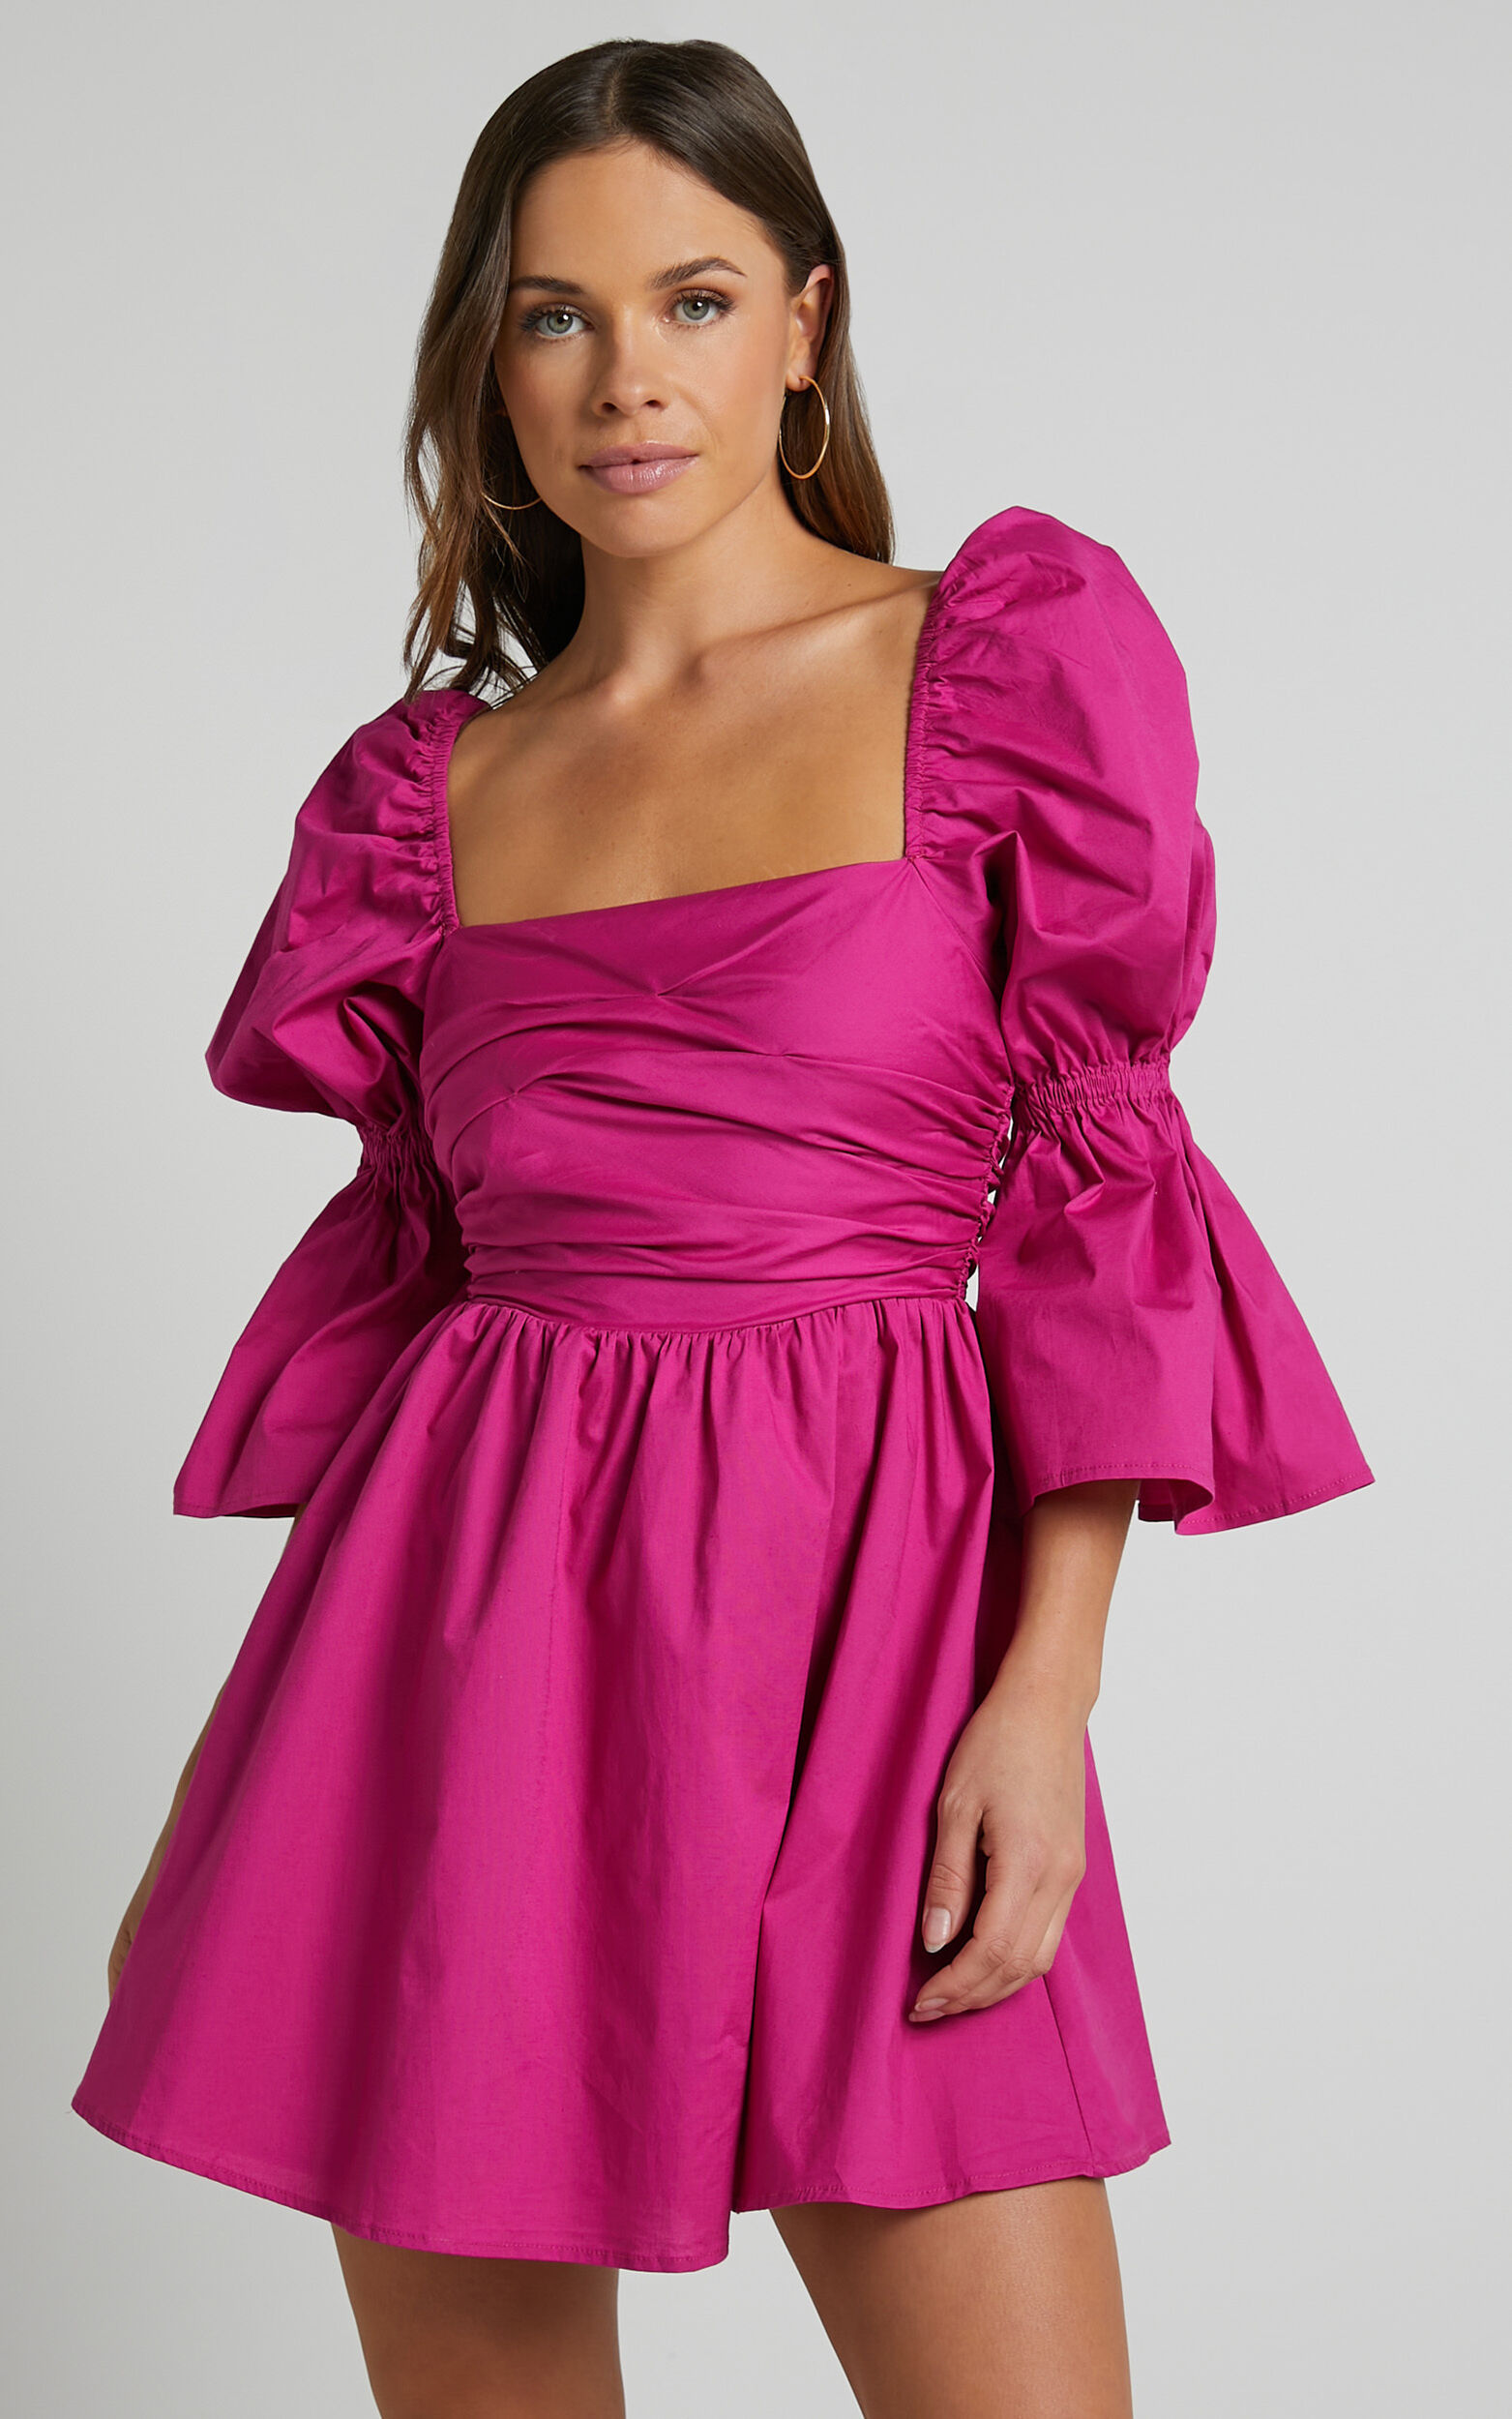 Adria Mini Dress - Long Puff Sleeve Square Neck Dress in Berry - 06, PNK1